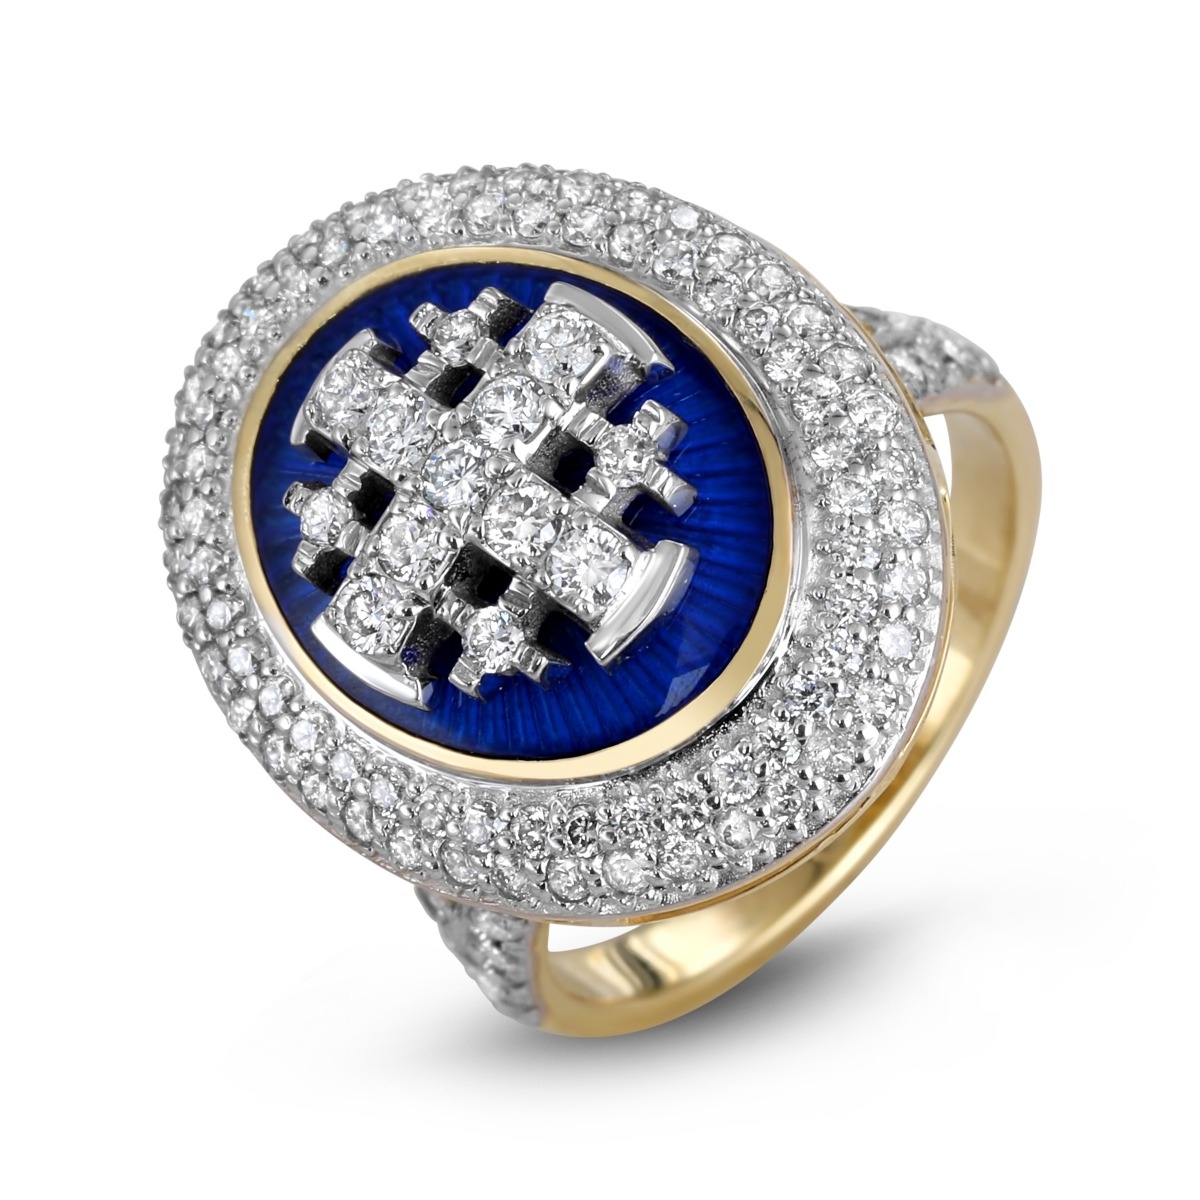 14K Gold and Diamond Enameled Vintage Double Halo Jerusalem Cross Art Deco Style Engagement Ring - 1